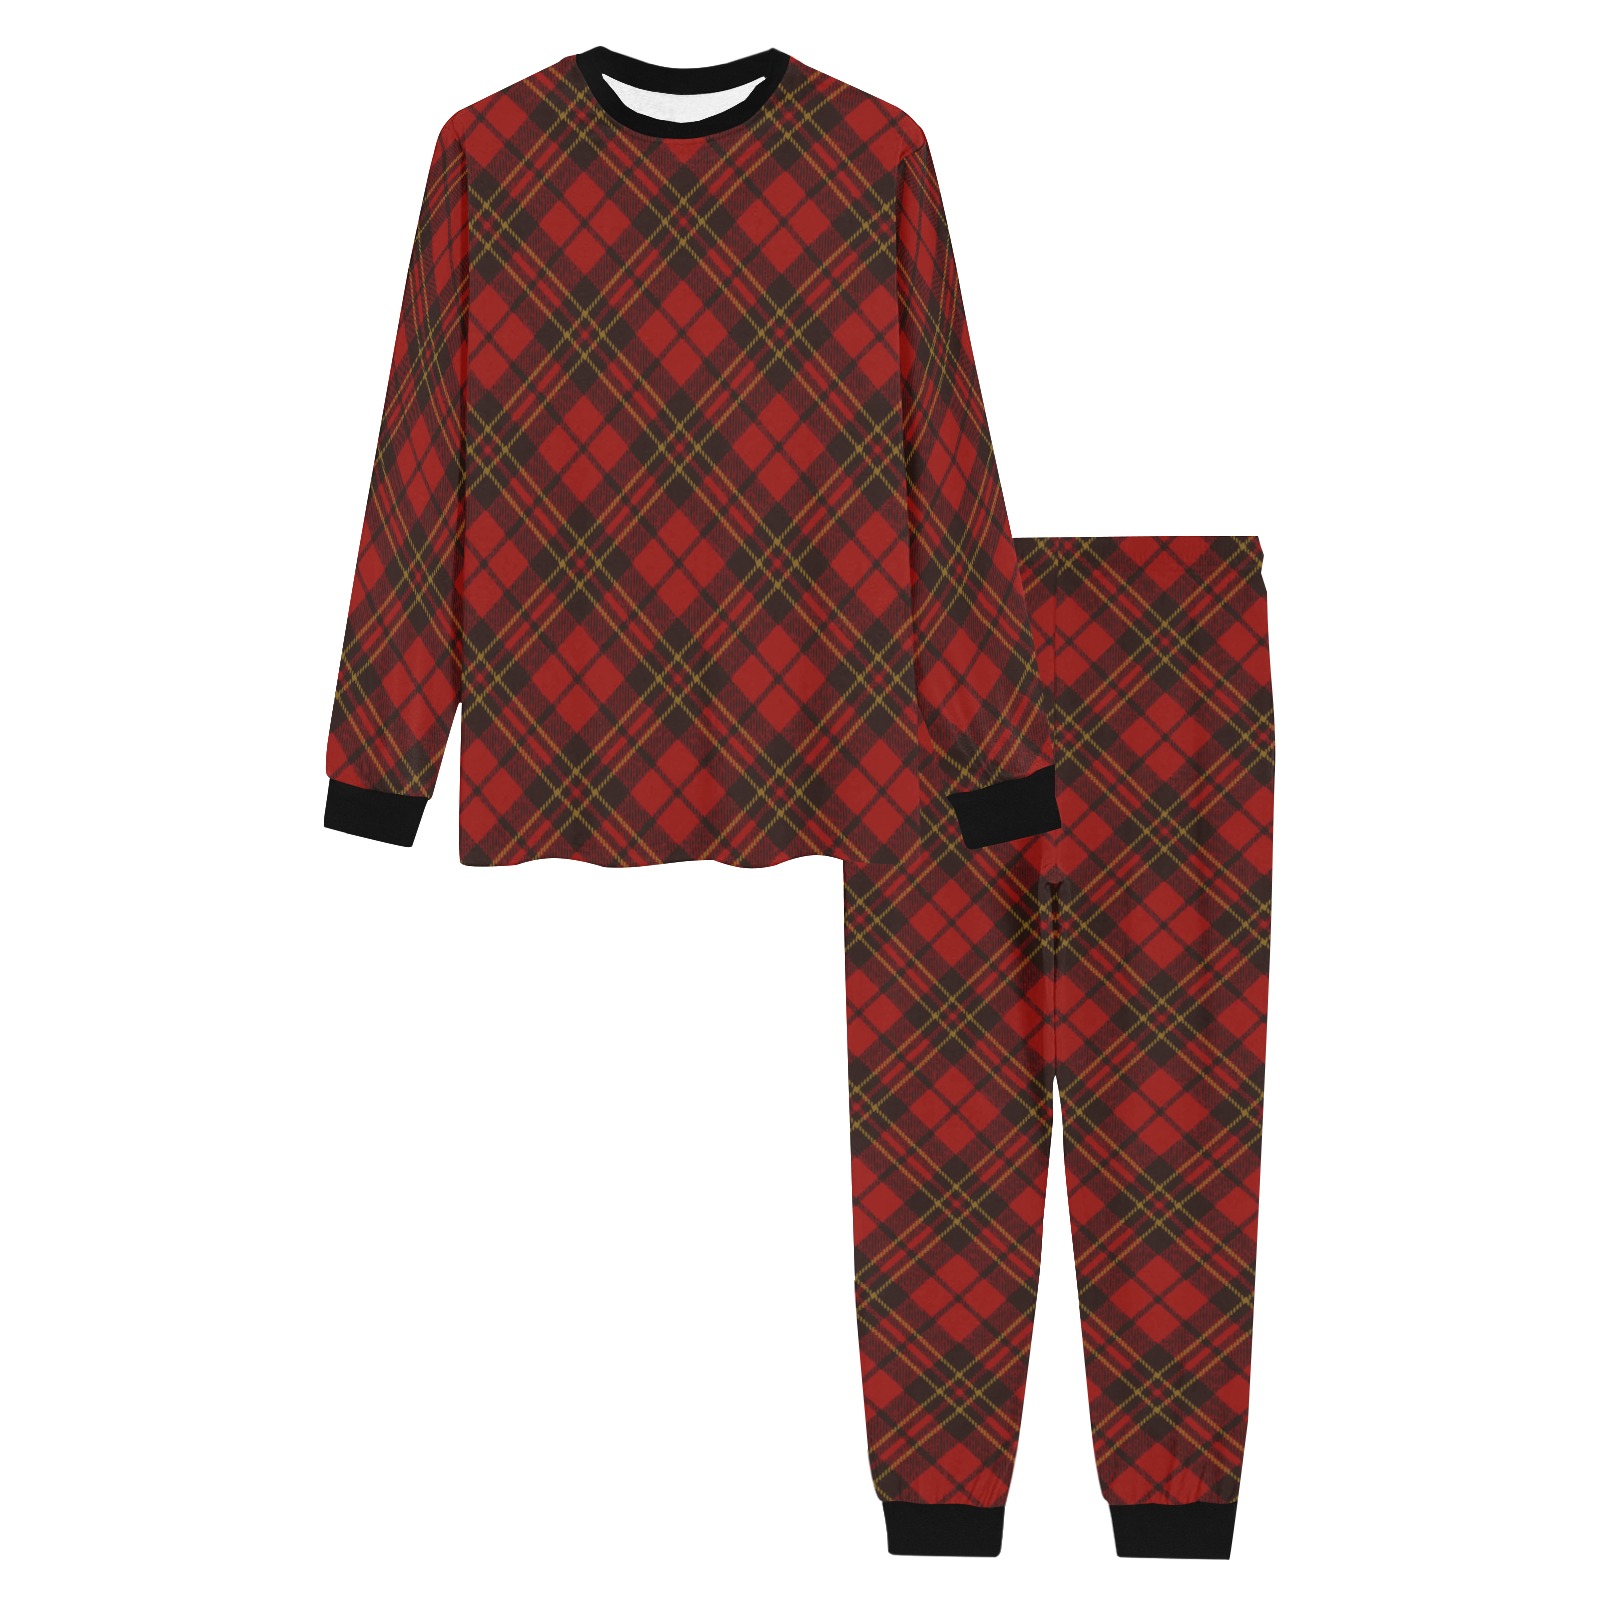 Red tartan plaid winter Christmas pattern holidays Men's All Over Print Pajama Set